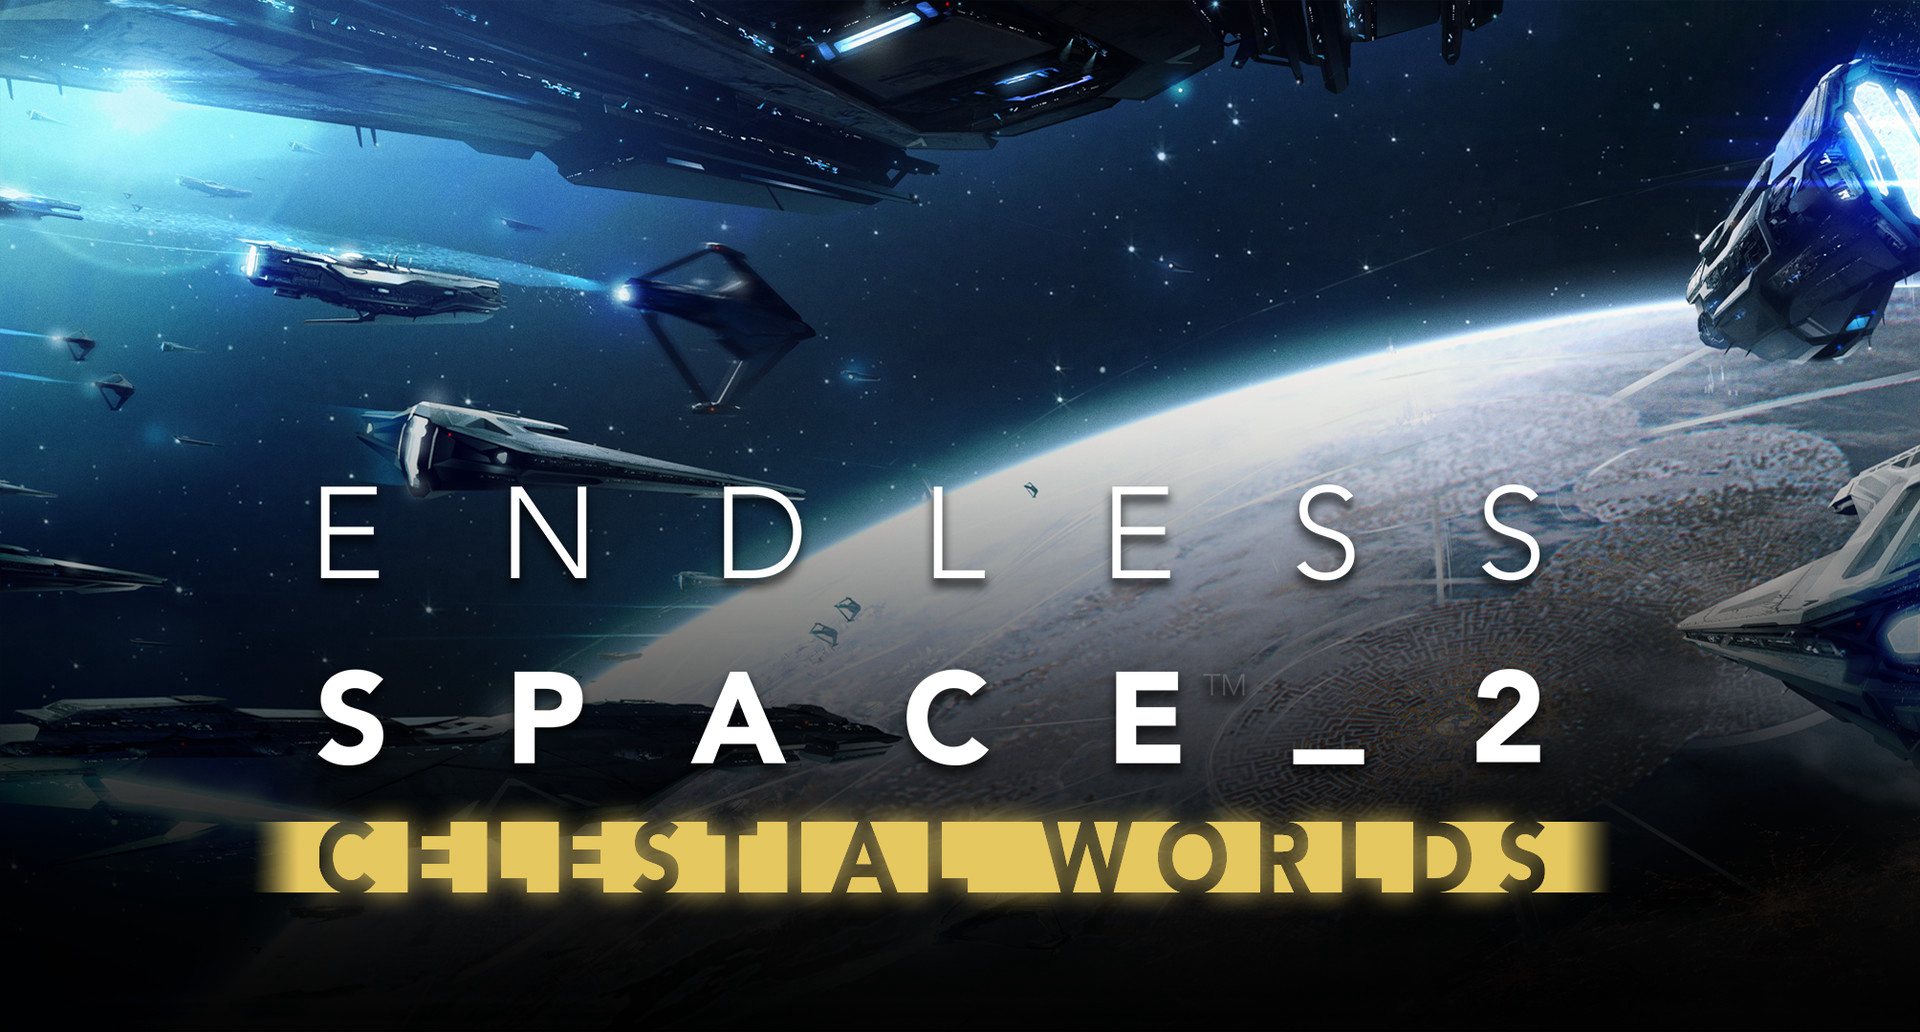 Endless Space 2 - Celestial Worlds DLC Steam CD Key [$ 2.2]